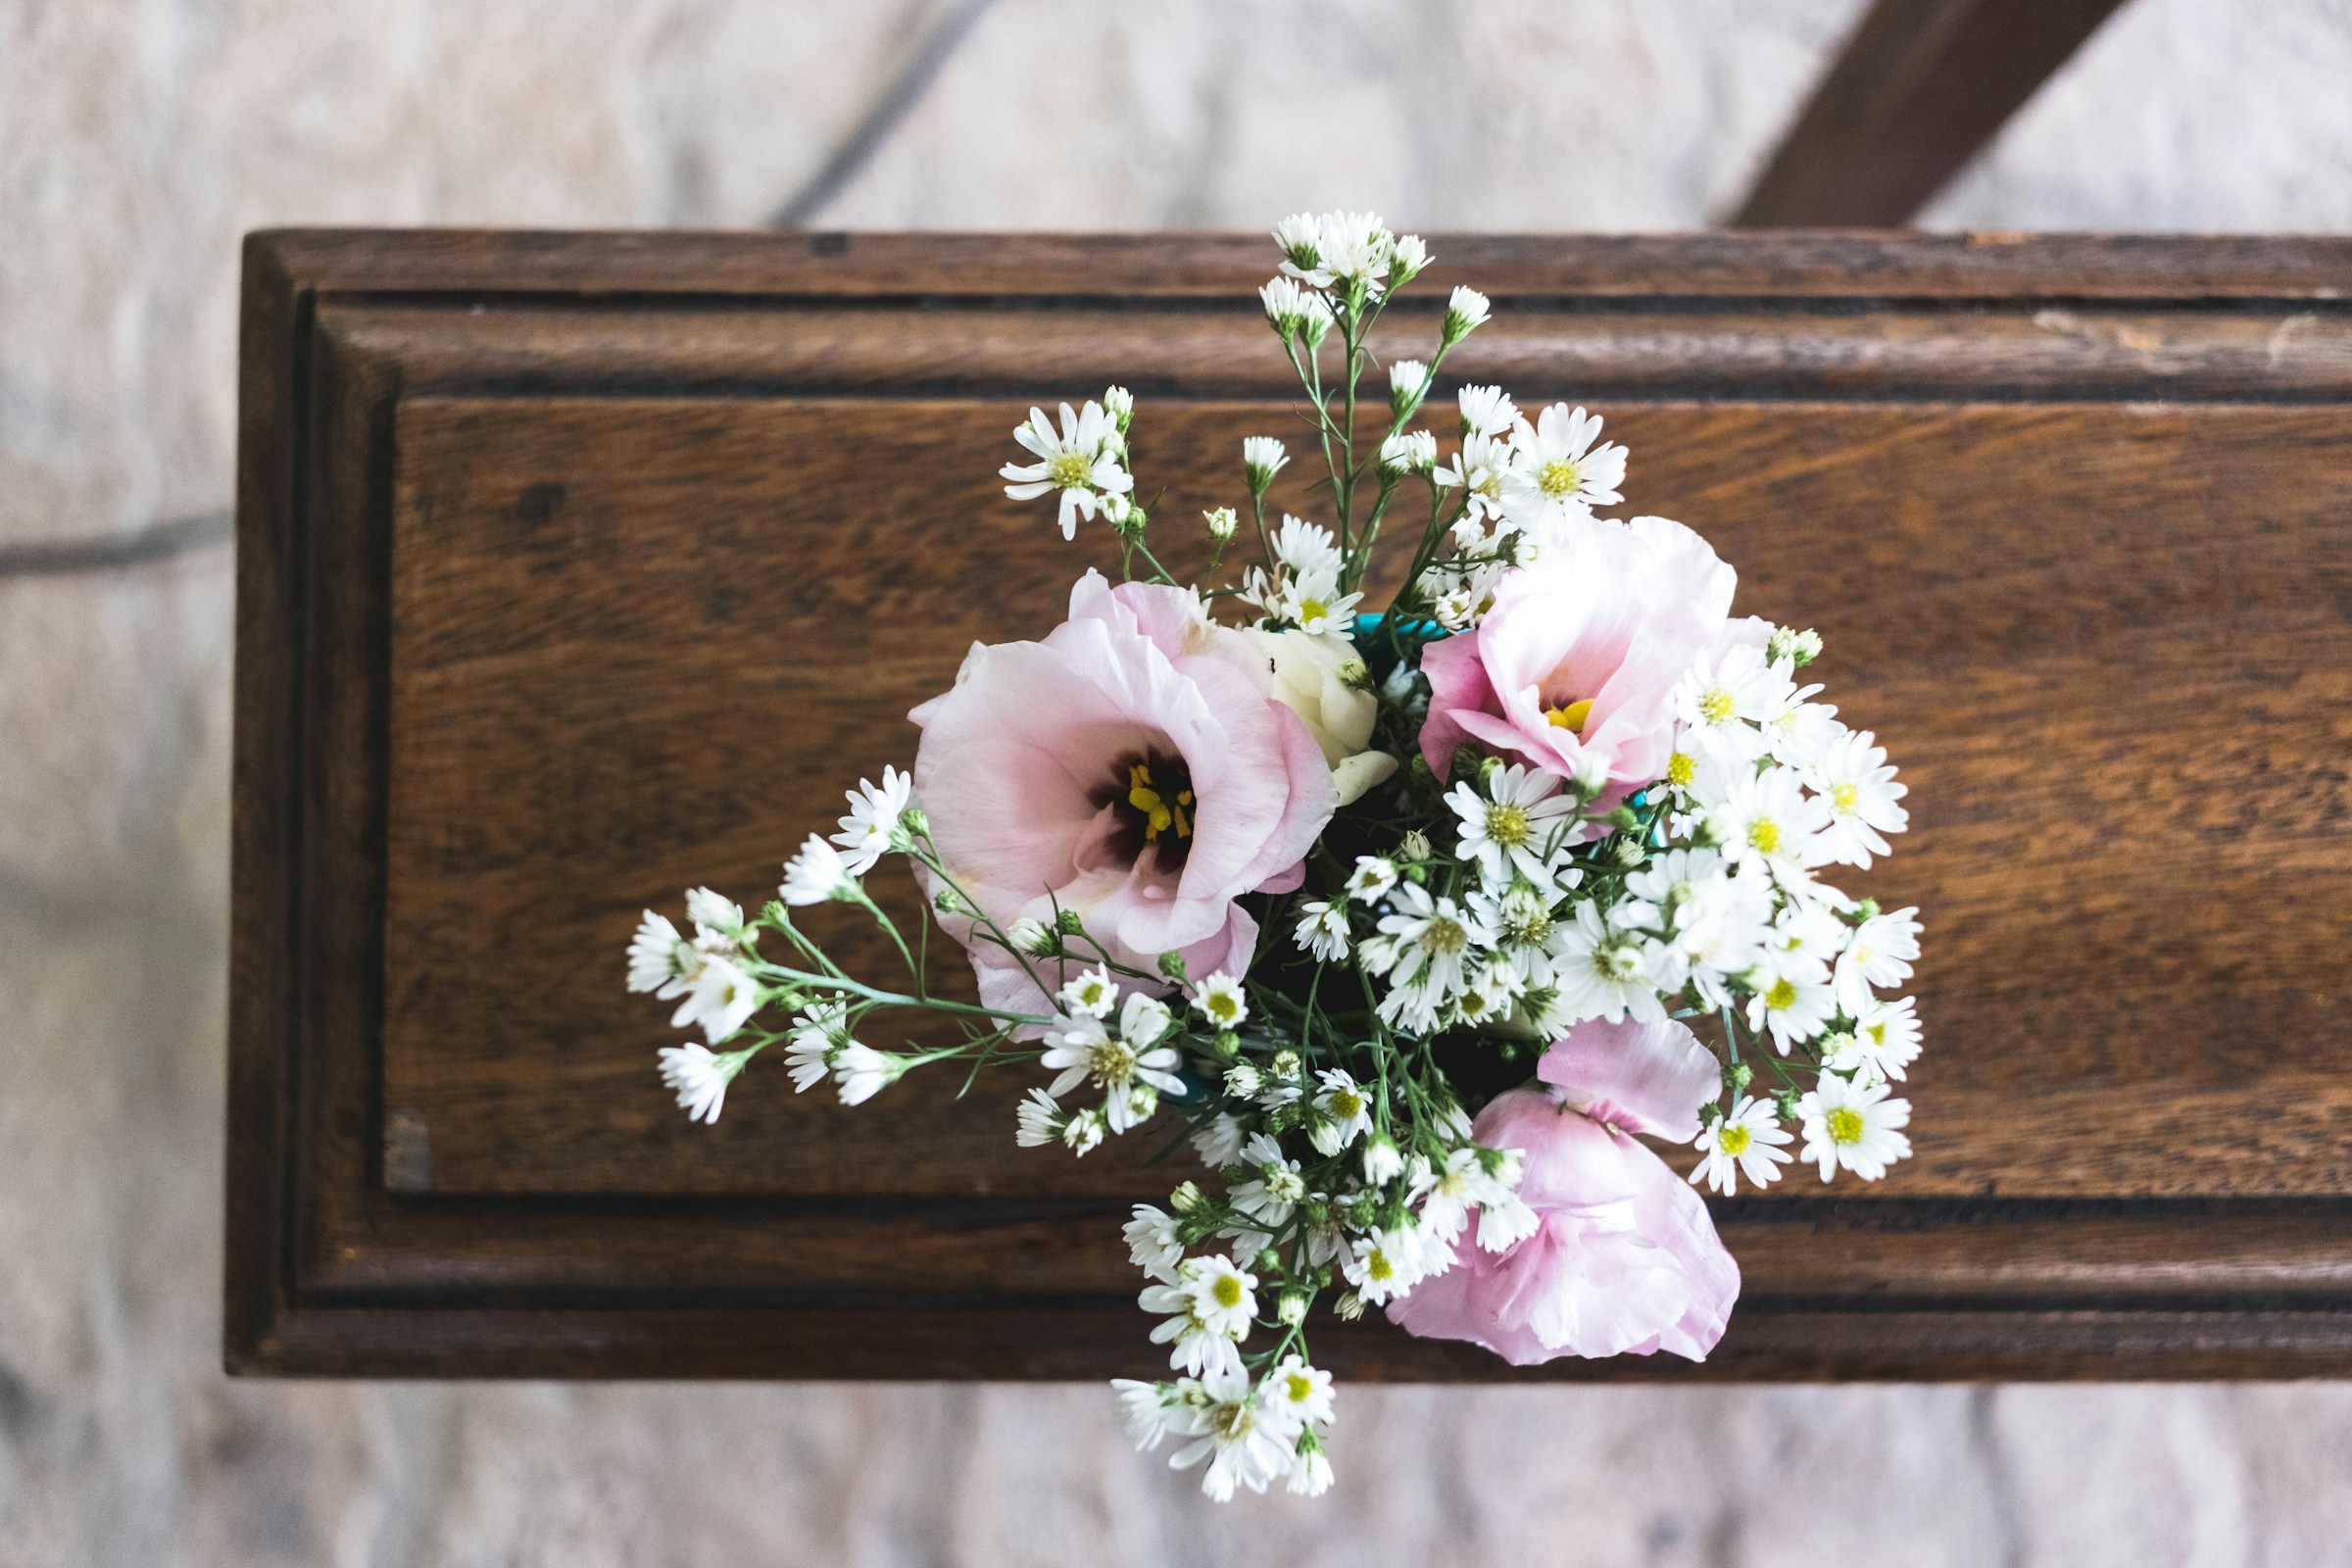 Flowers on a closed casket | Source: Unsplash